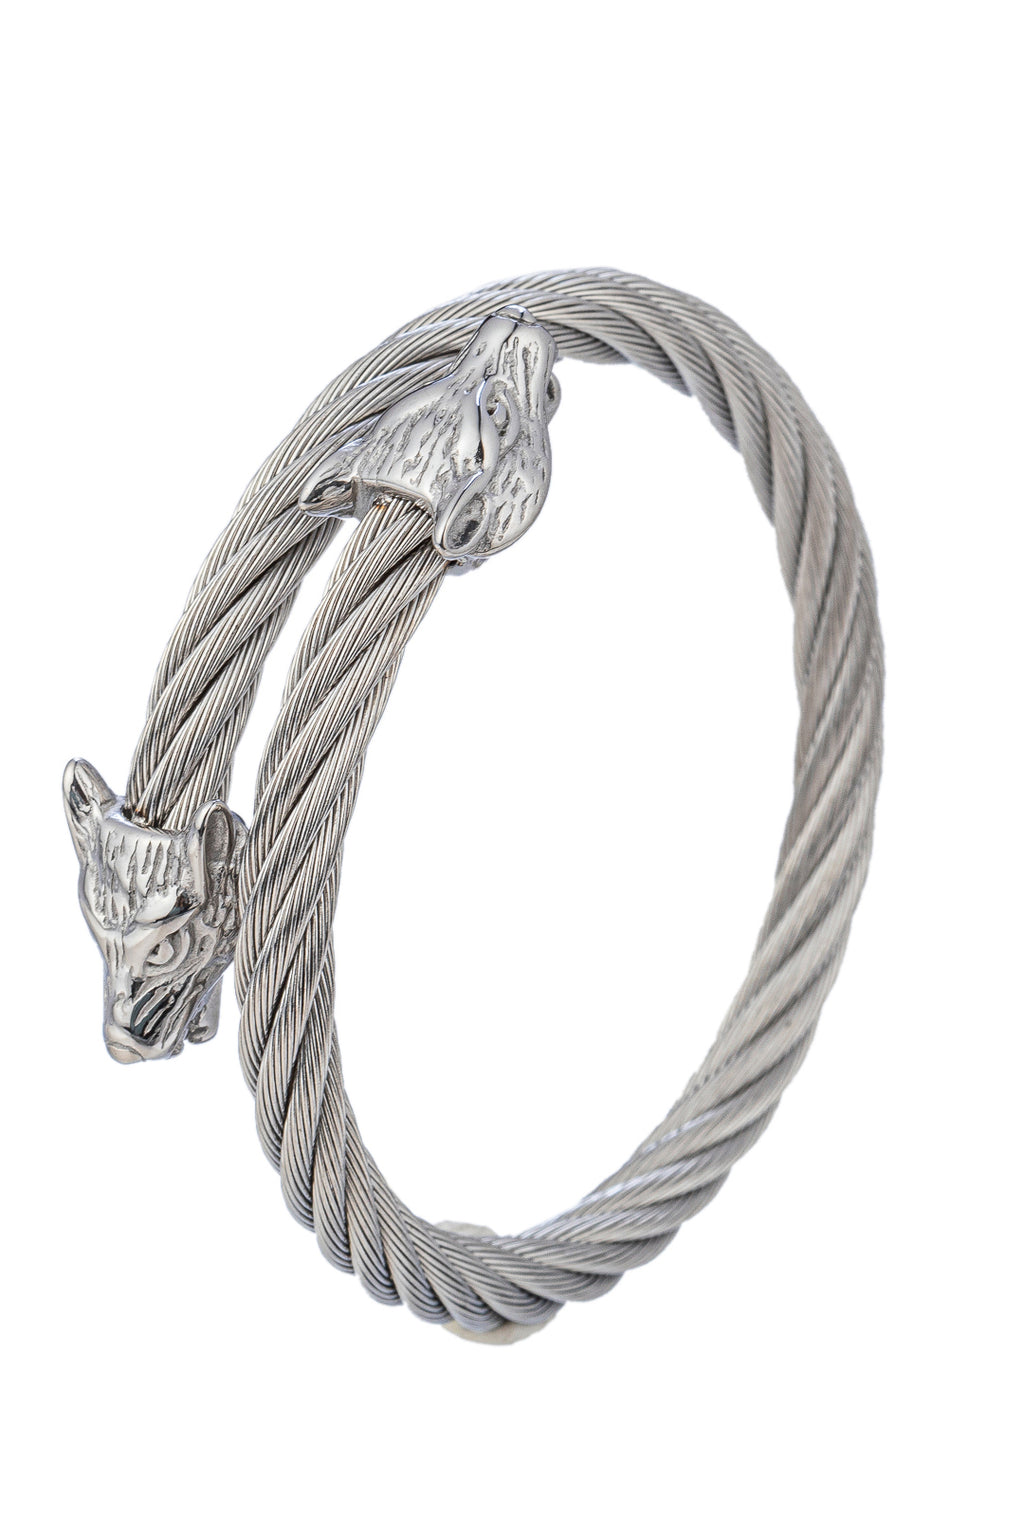 Silver titanium wolf head pendant cuff bracelet. 